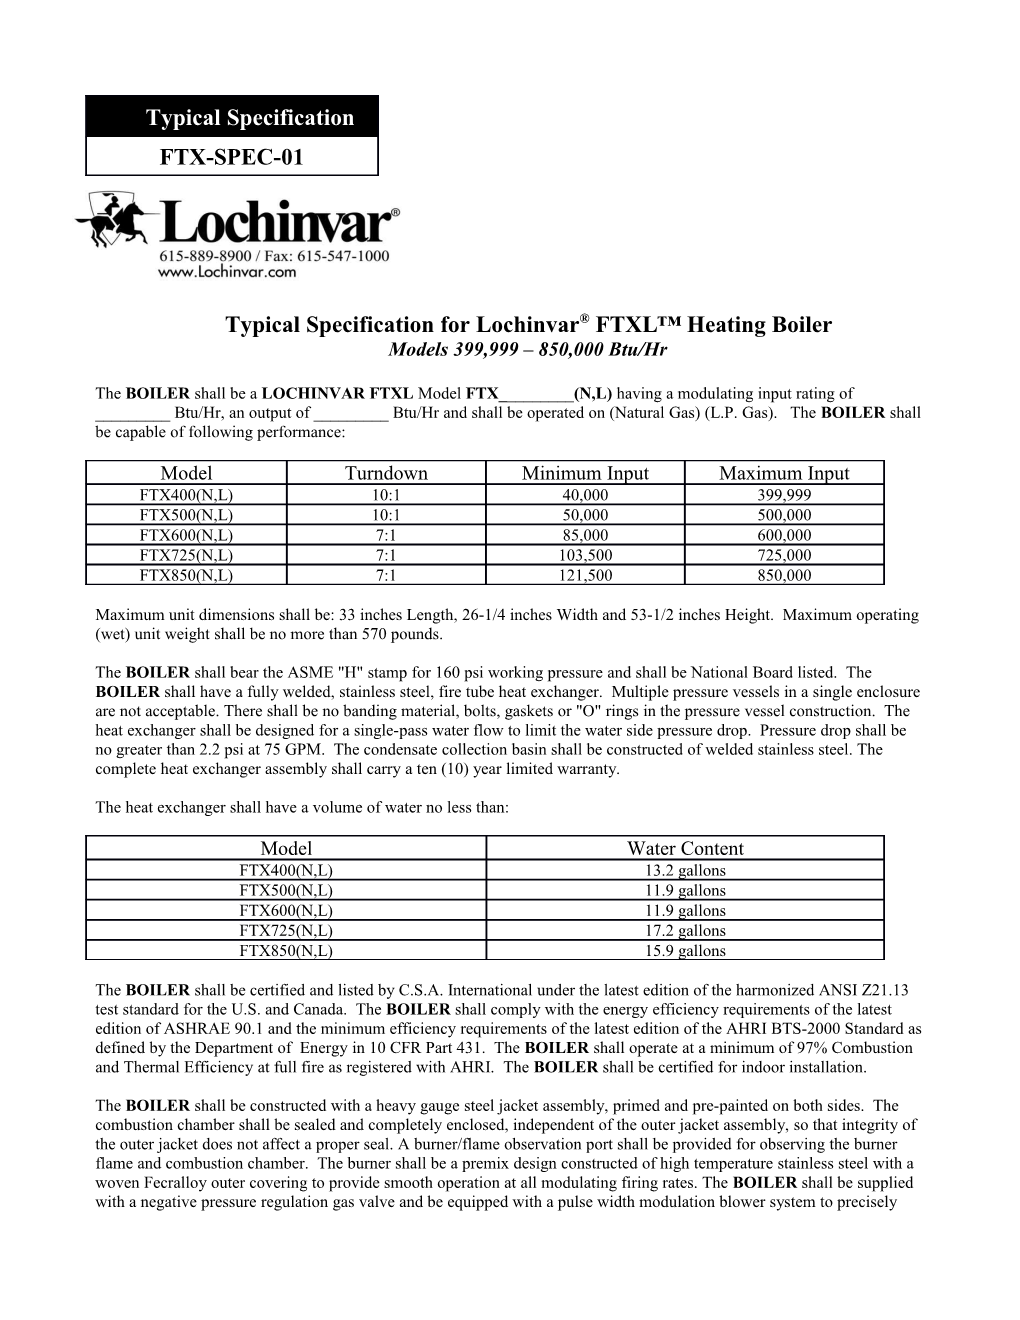 Typicalspecificationfor Lochinvar FTXL Heating Boiler